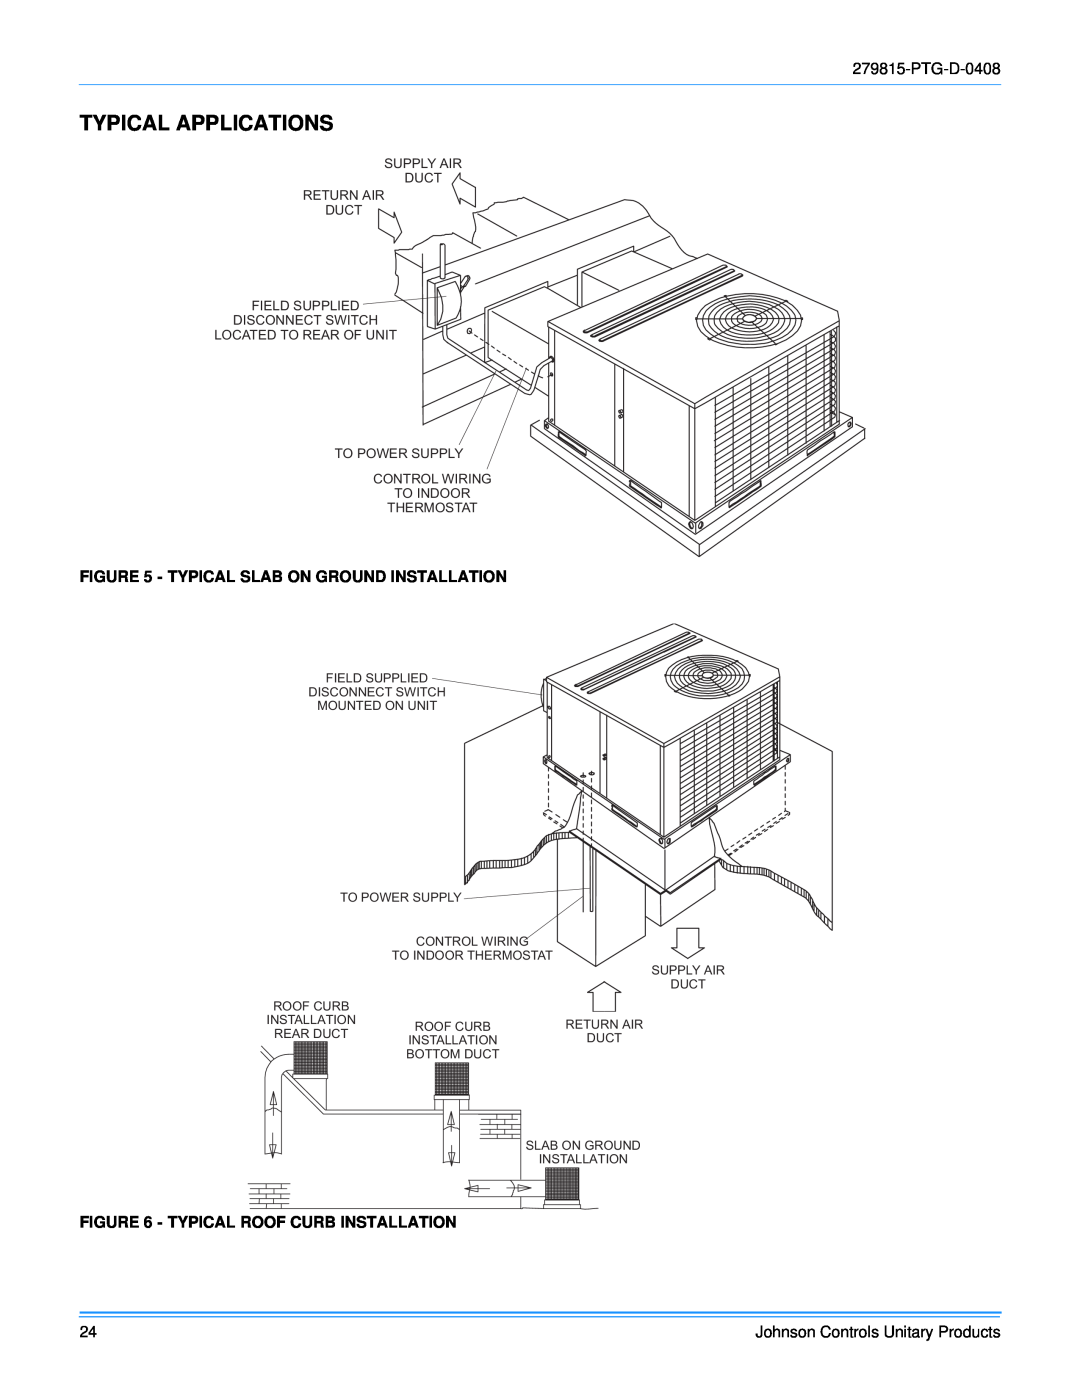 Johnson Controls ACPU024 THRU 060 manual Typical Applications, Typical Slab On Ground Installation 